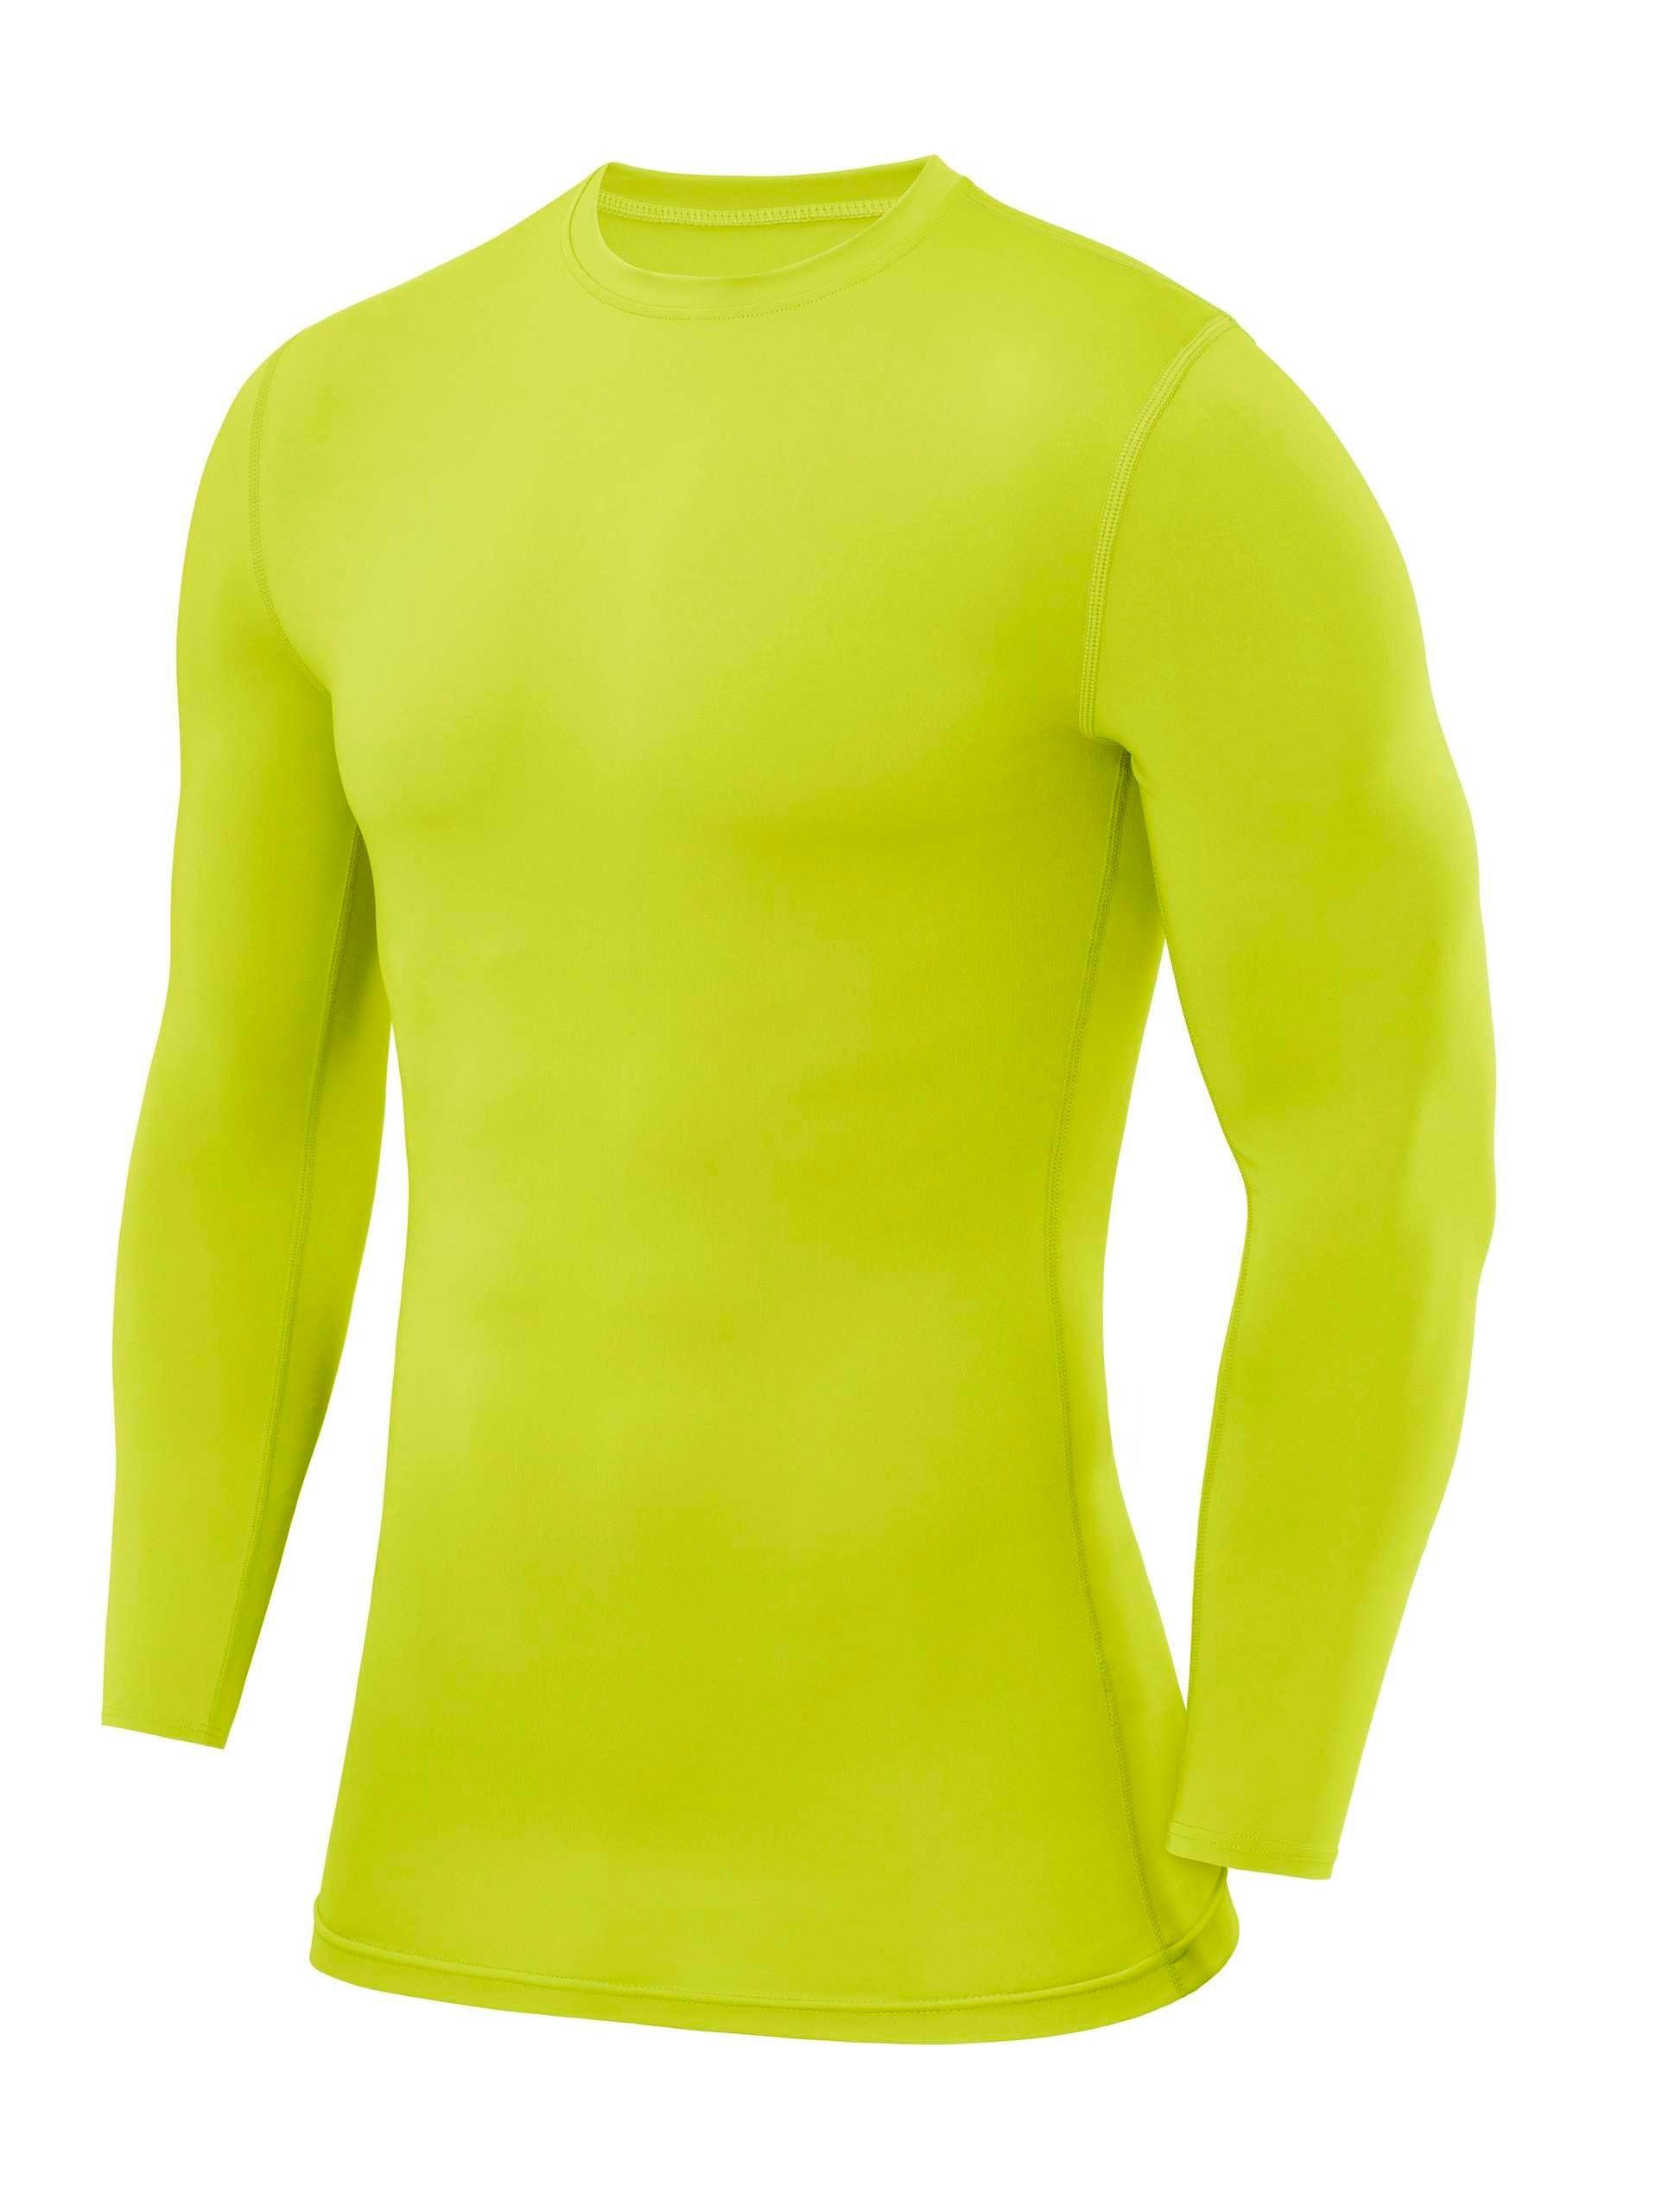 POWERLAYER Langarmshirt PowerLayer Kompressions Shirt Herren Rundhalsausschnitt Grün XS